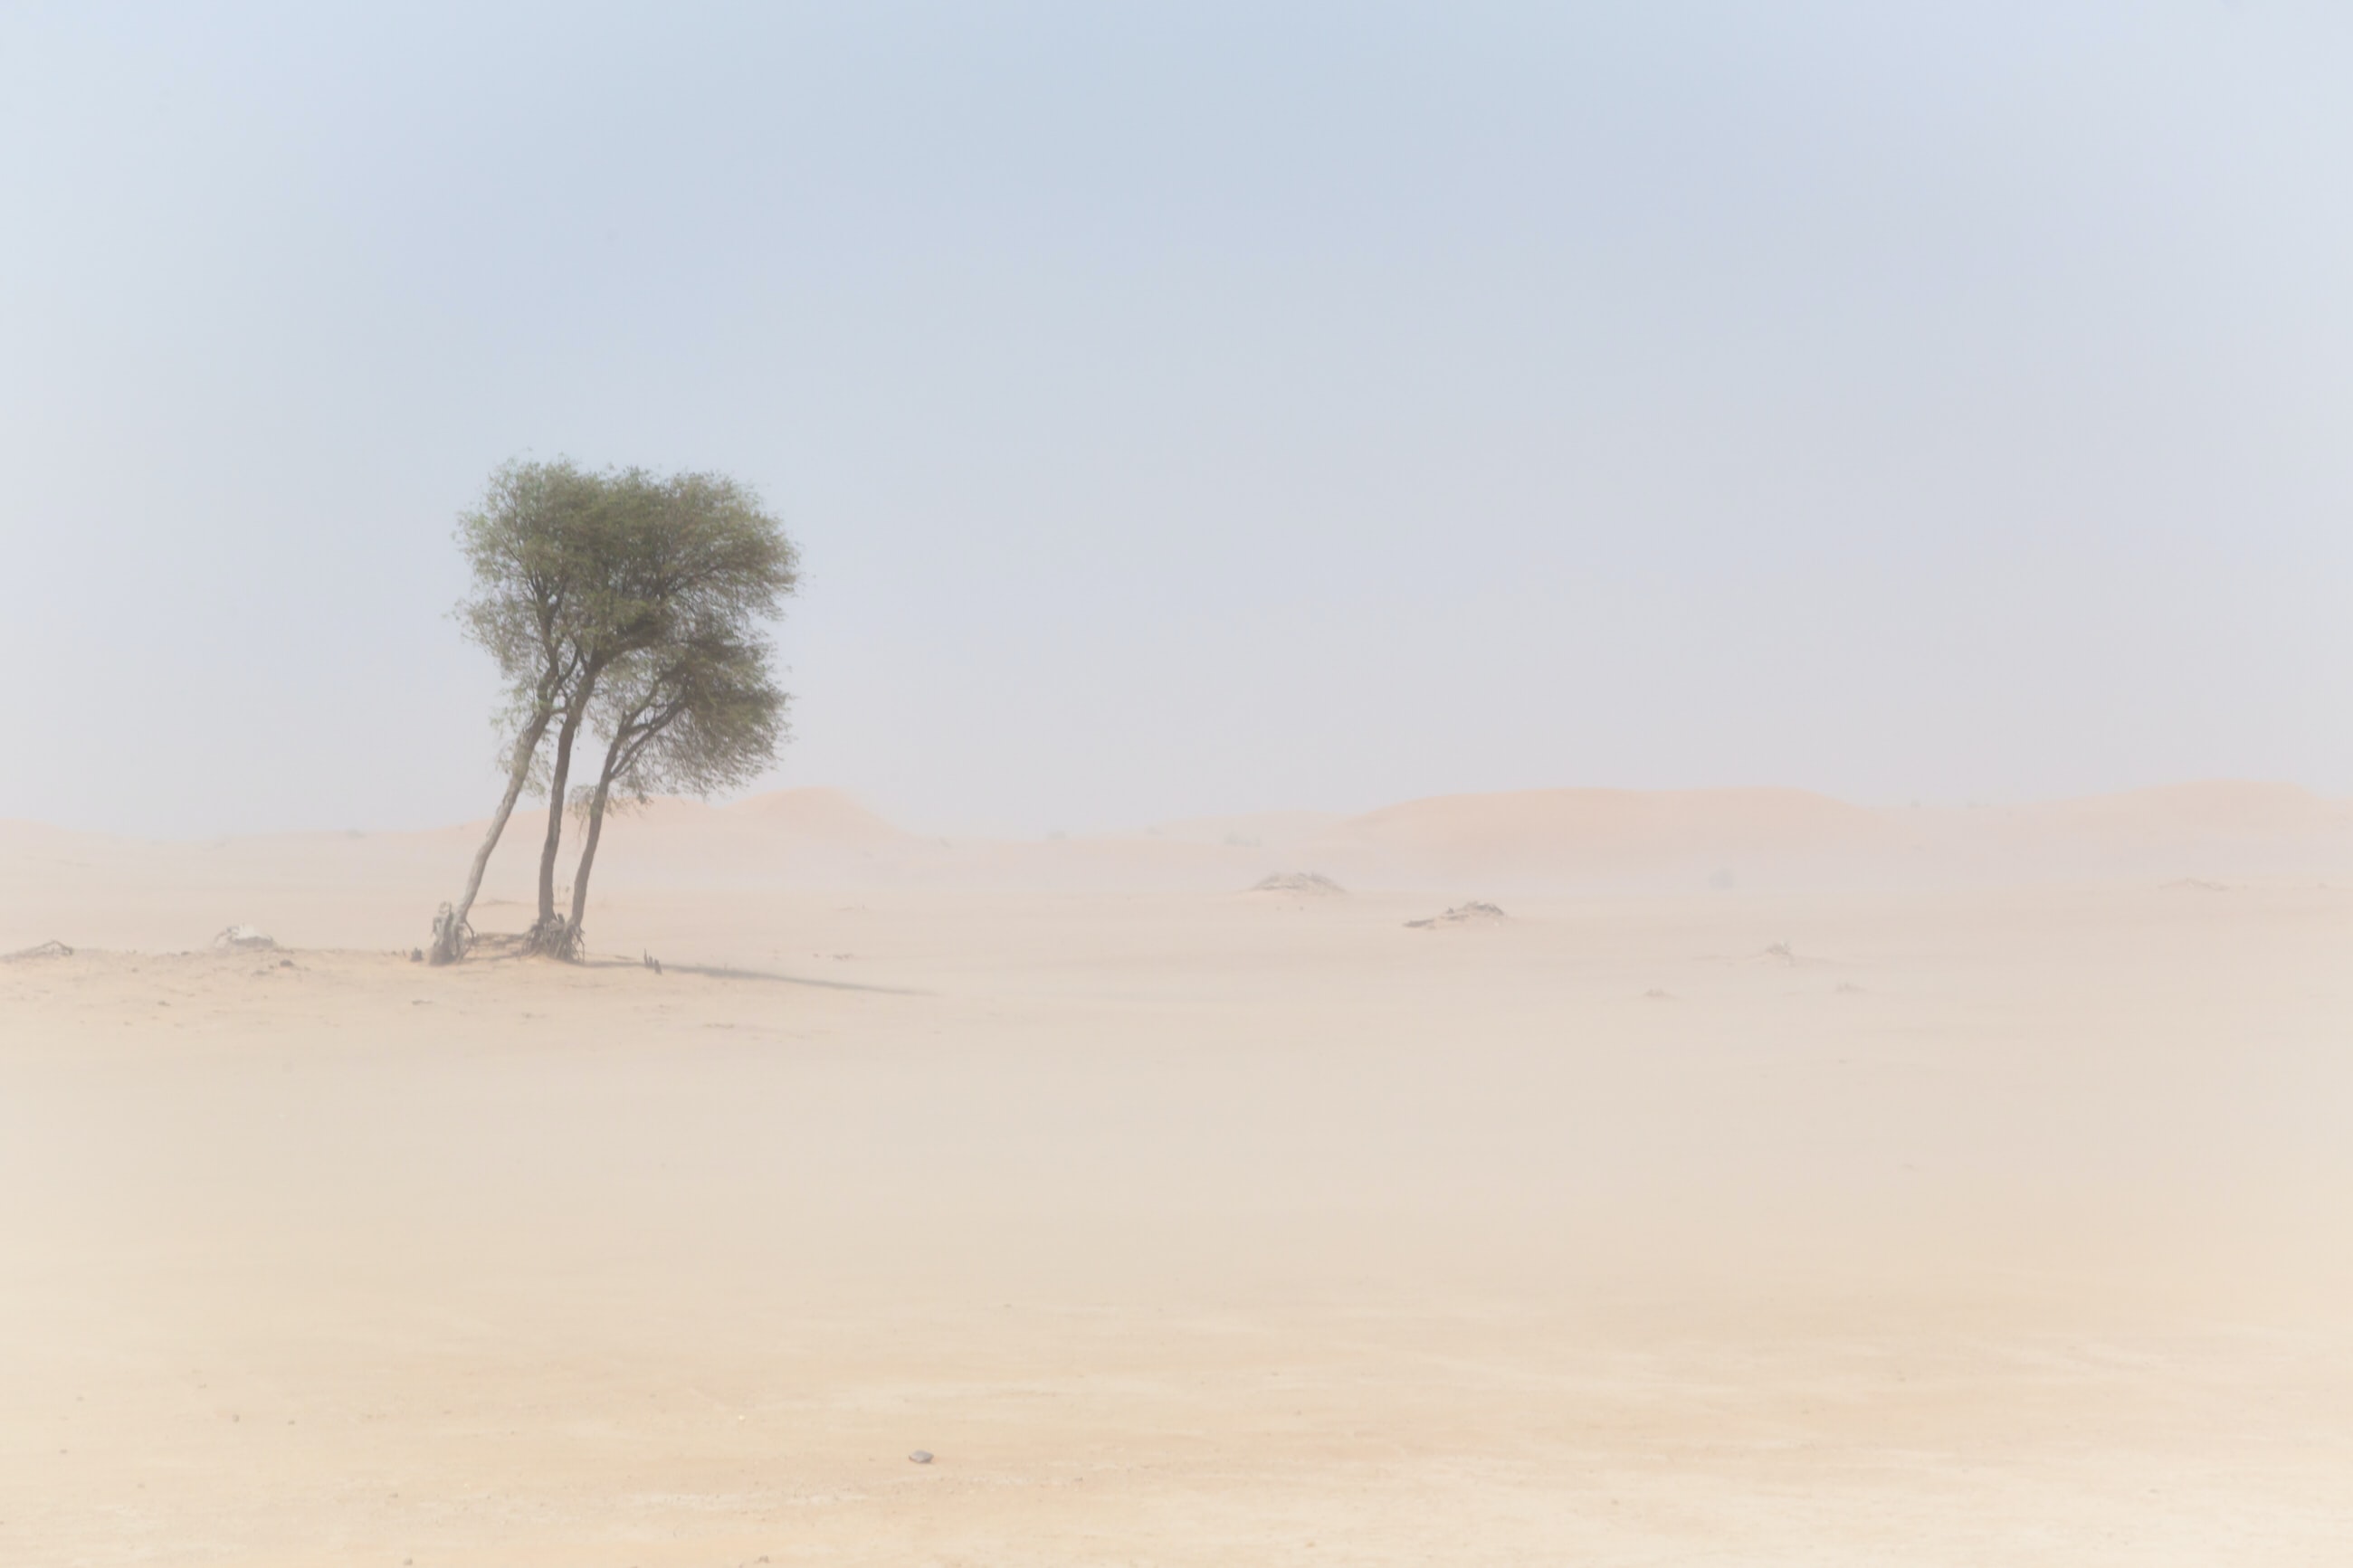 Desert tree_robert-metz_unsplash.jpg